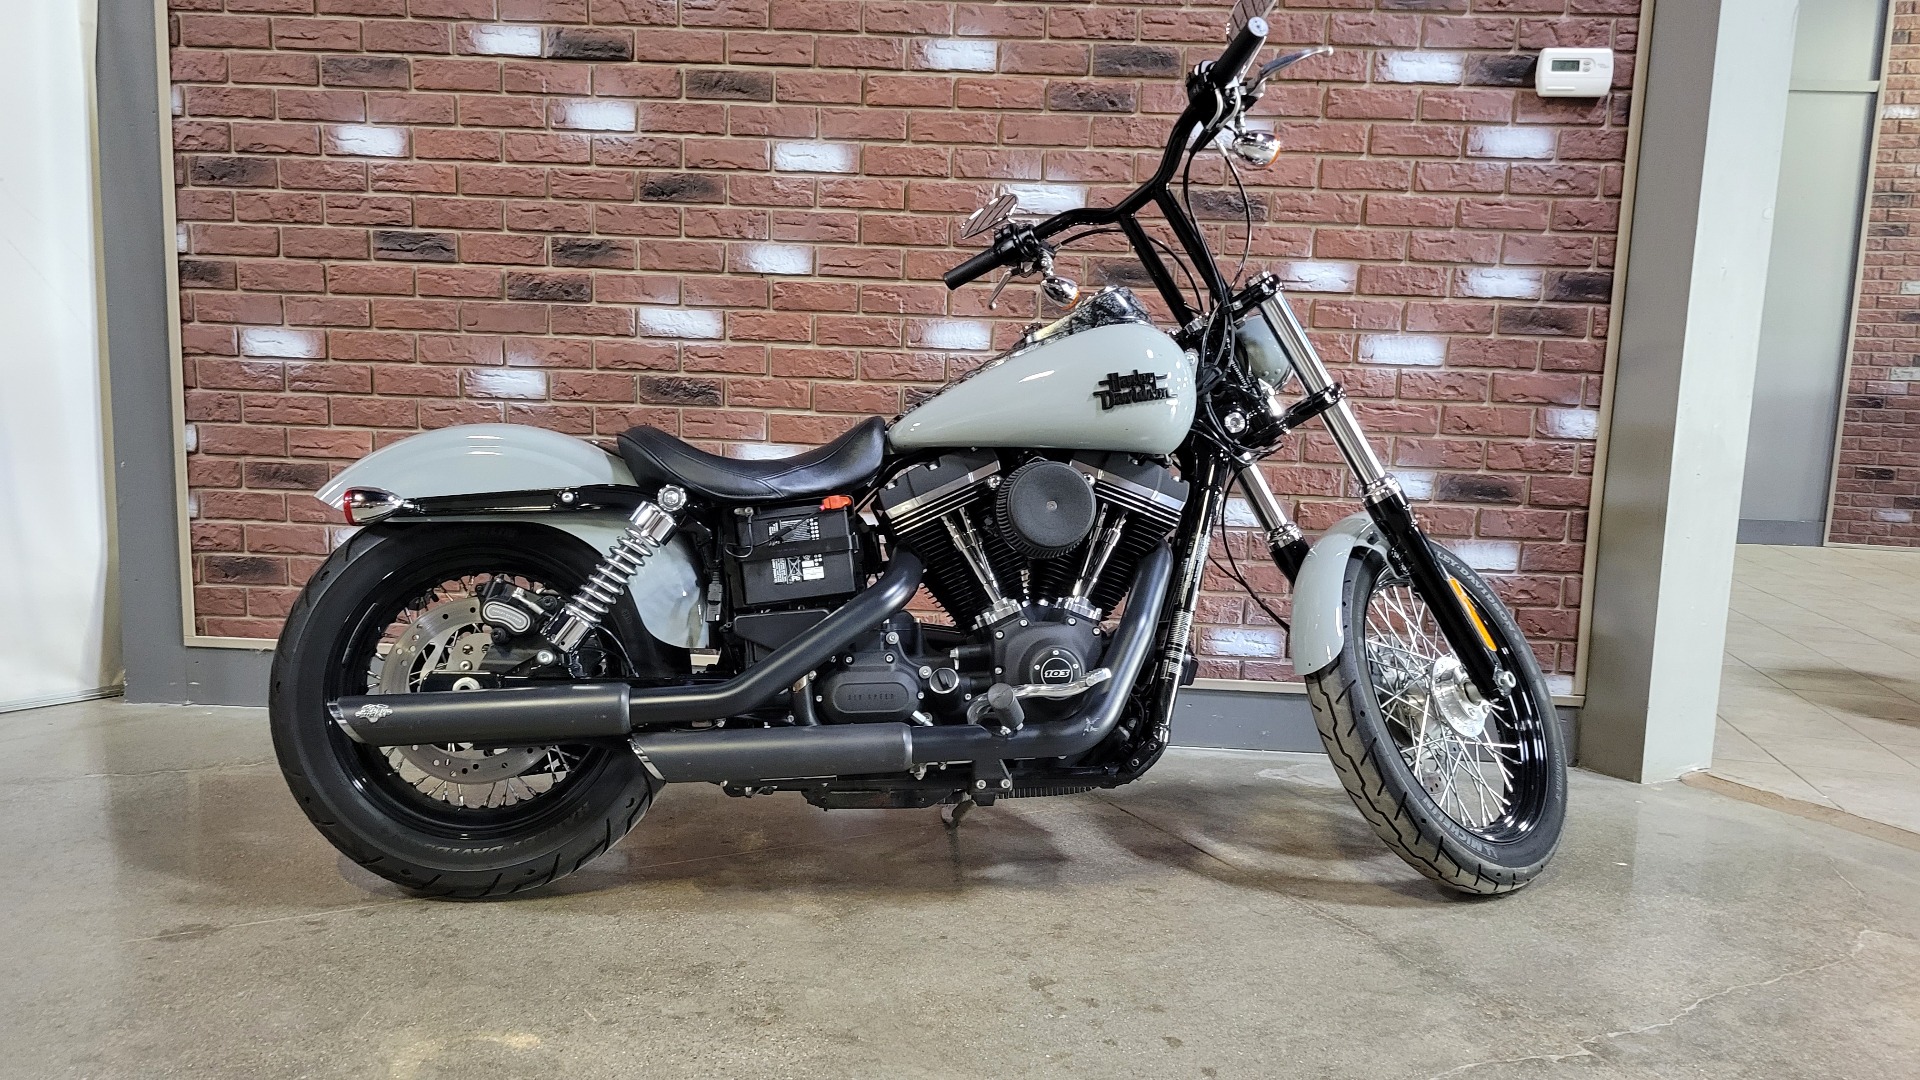 2016 Harley Davidson Street Bob Motorcycles For Sale In Lansing Mi Fullthrottlemotorsports Com